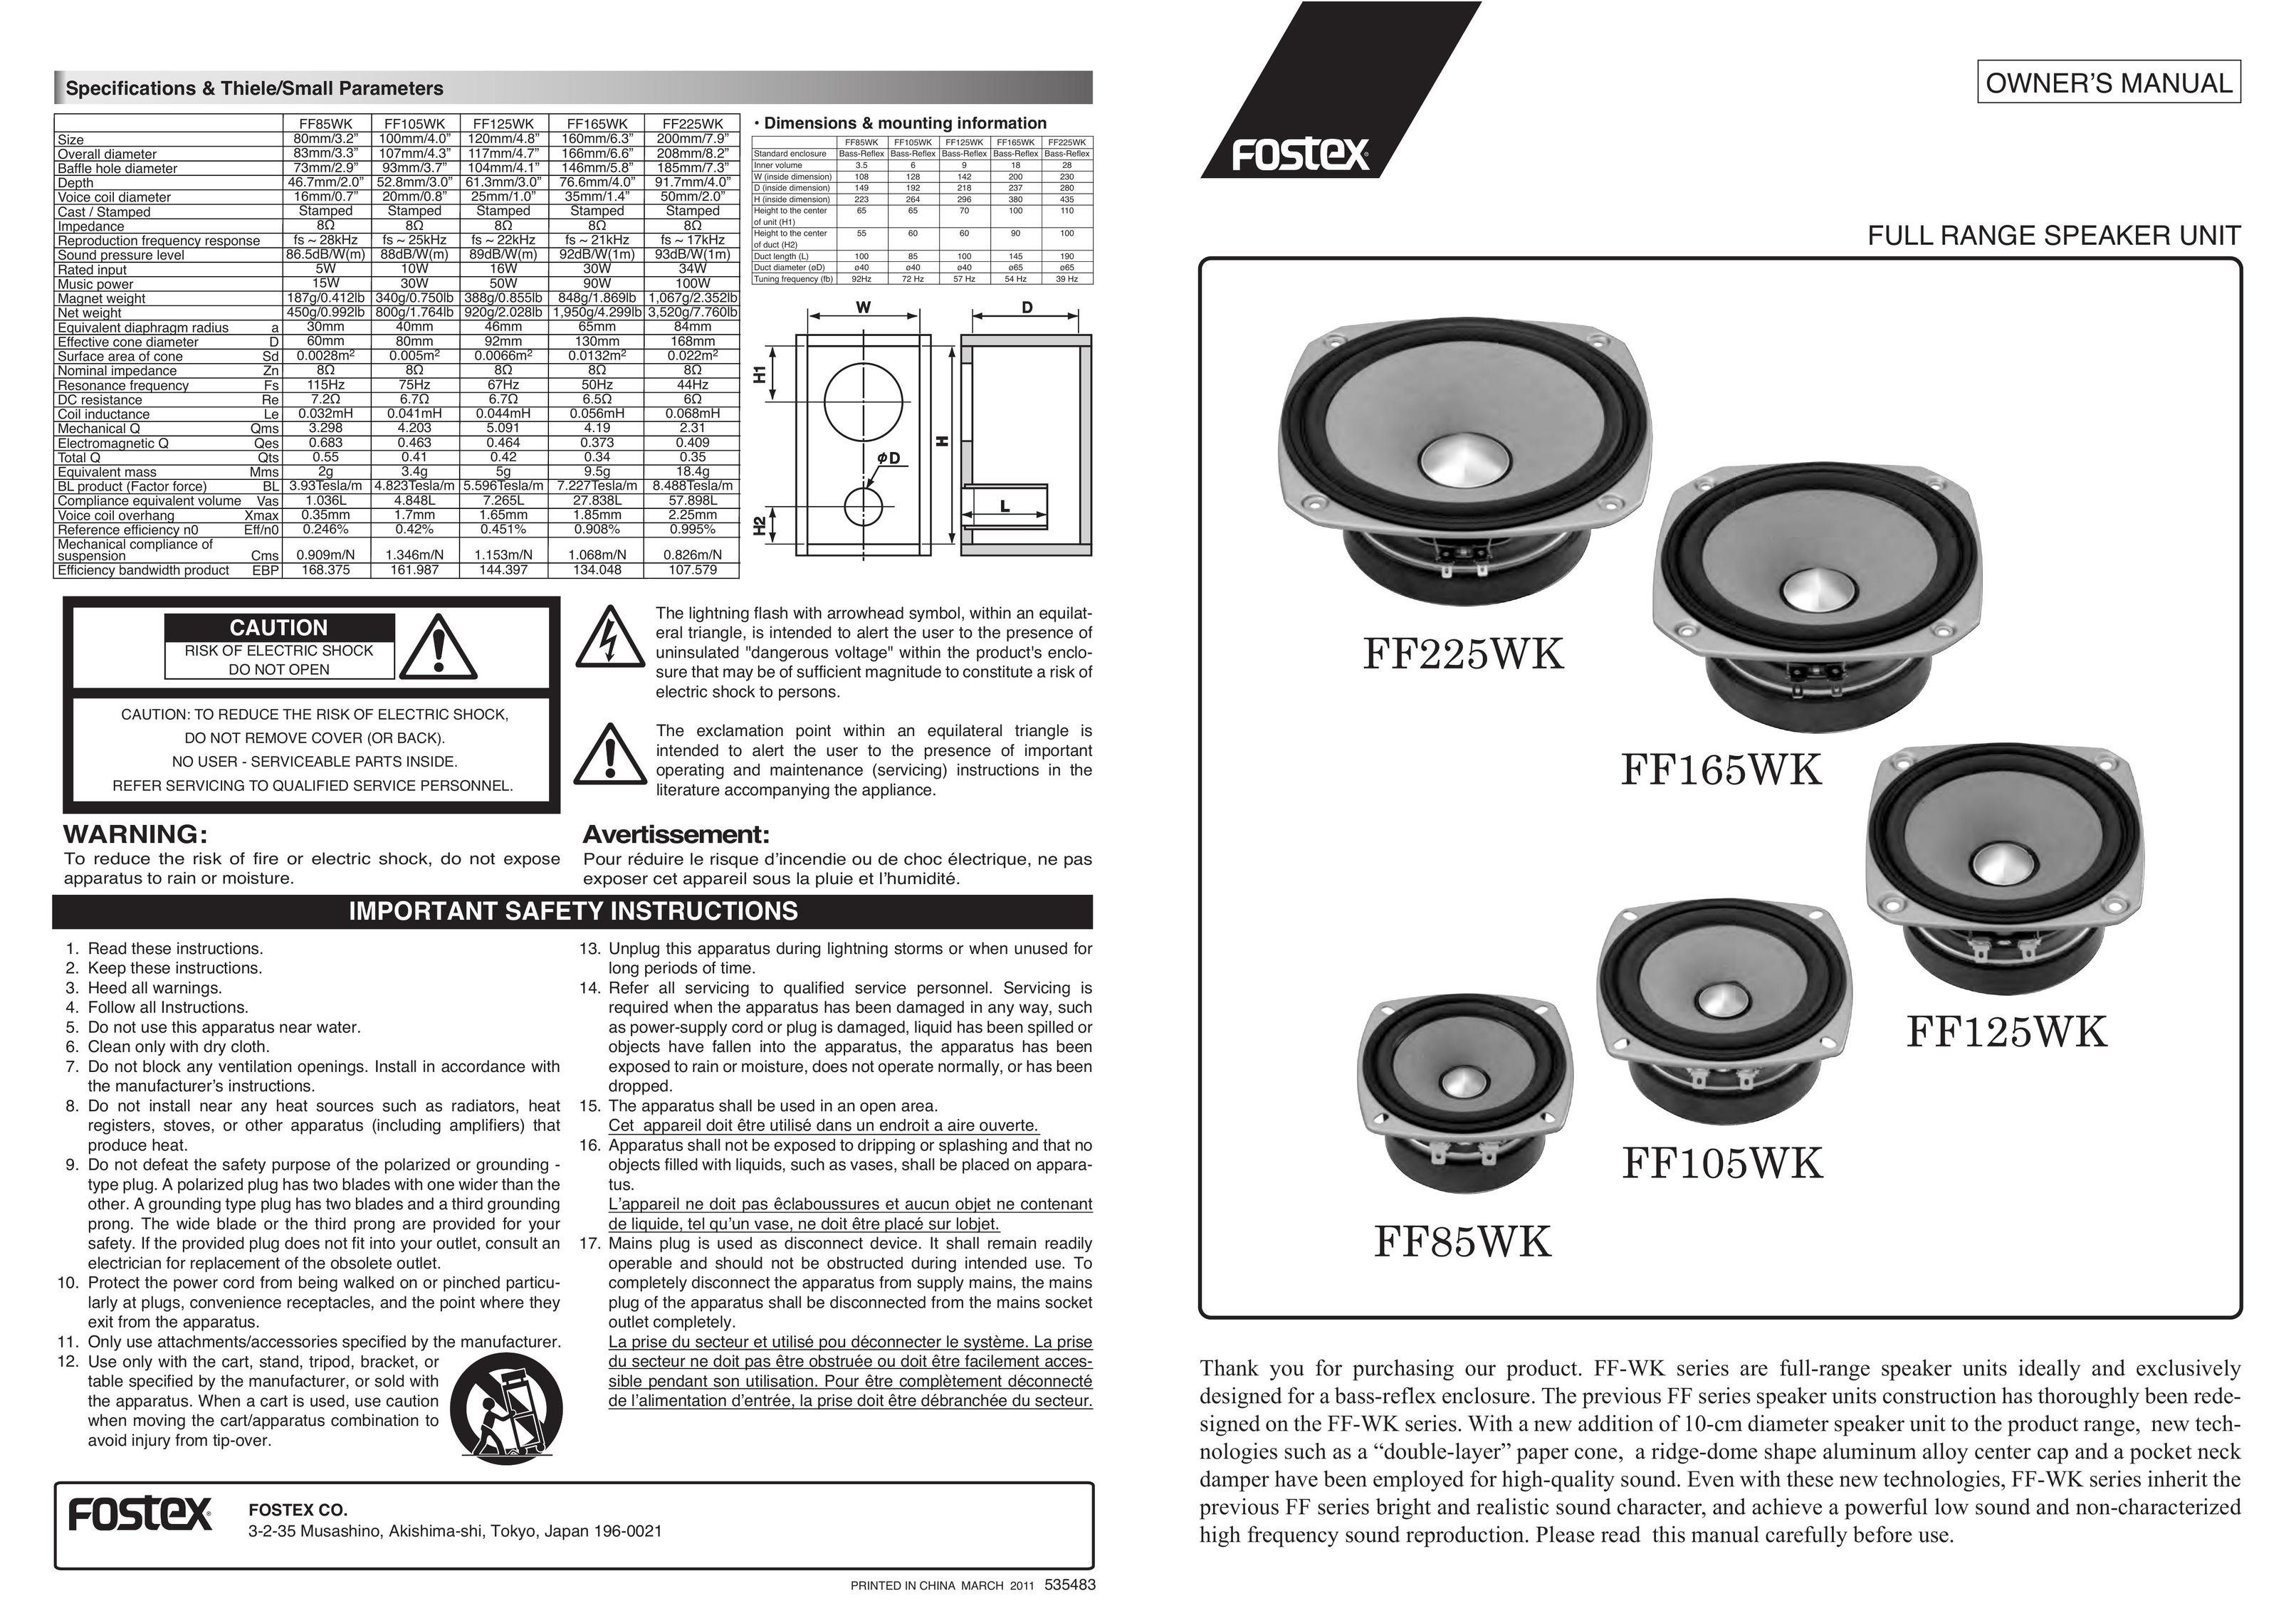 Fostex FF105WK Car Speaker User Manual